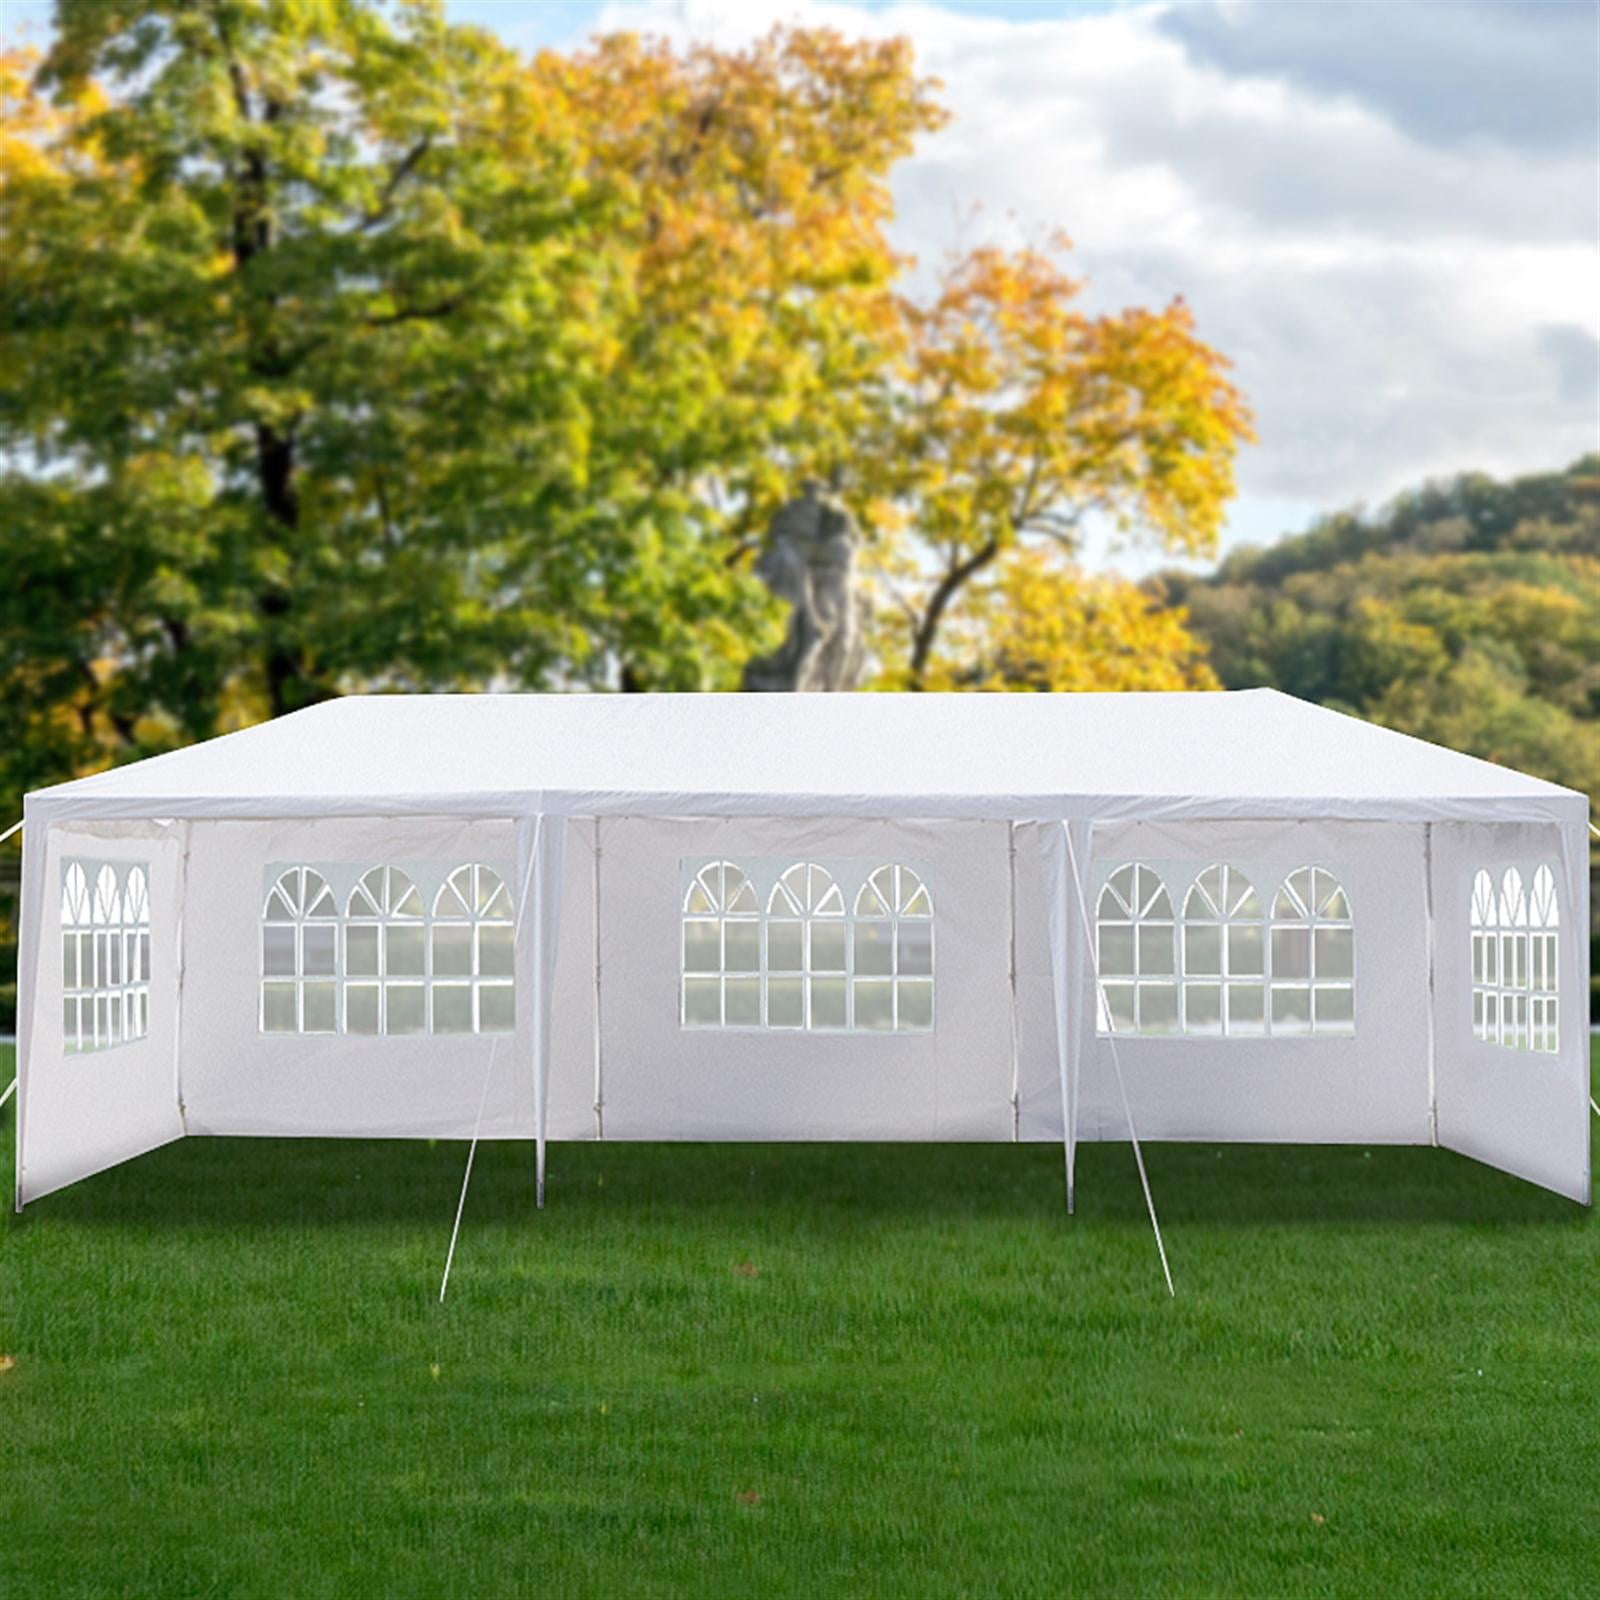 10'x30' Party Tent Canopy Pavilion Heavy Duty Outdoor BBQ Wedding Gazebo Events 